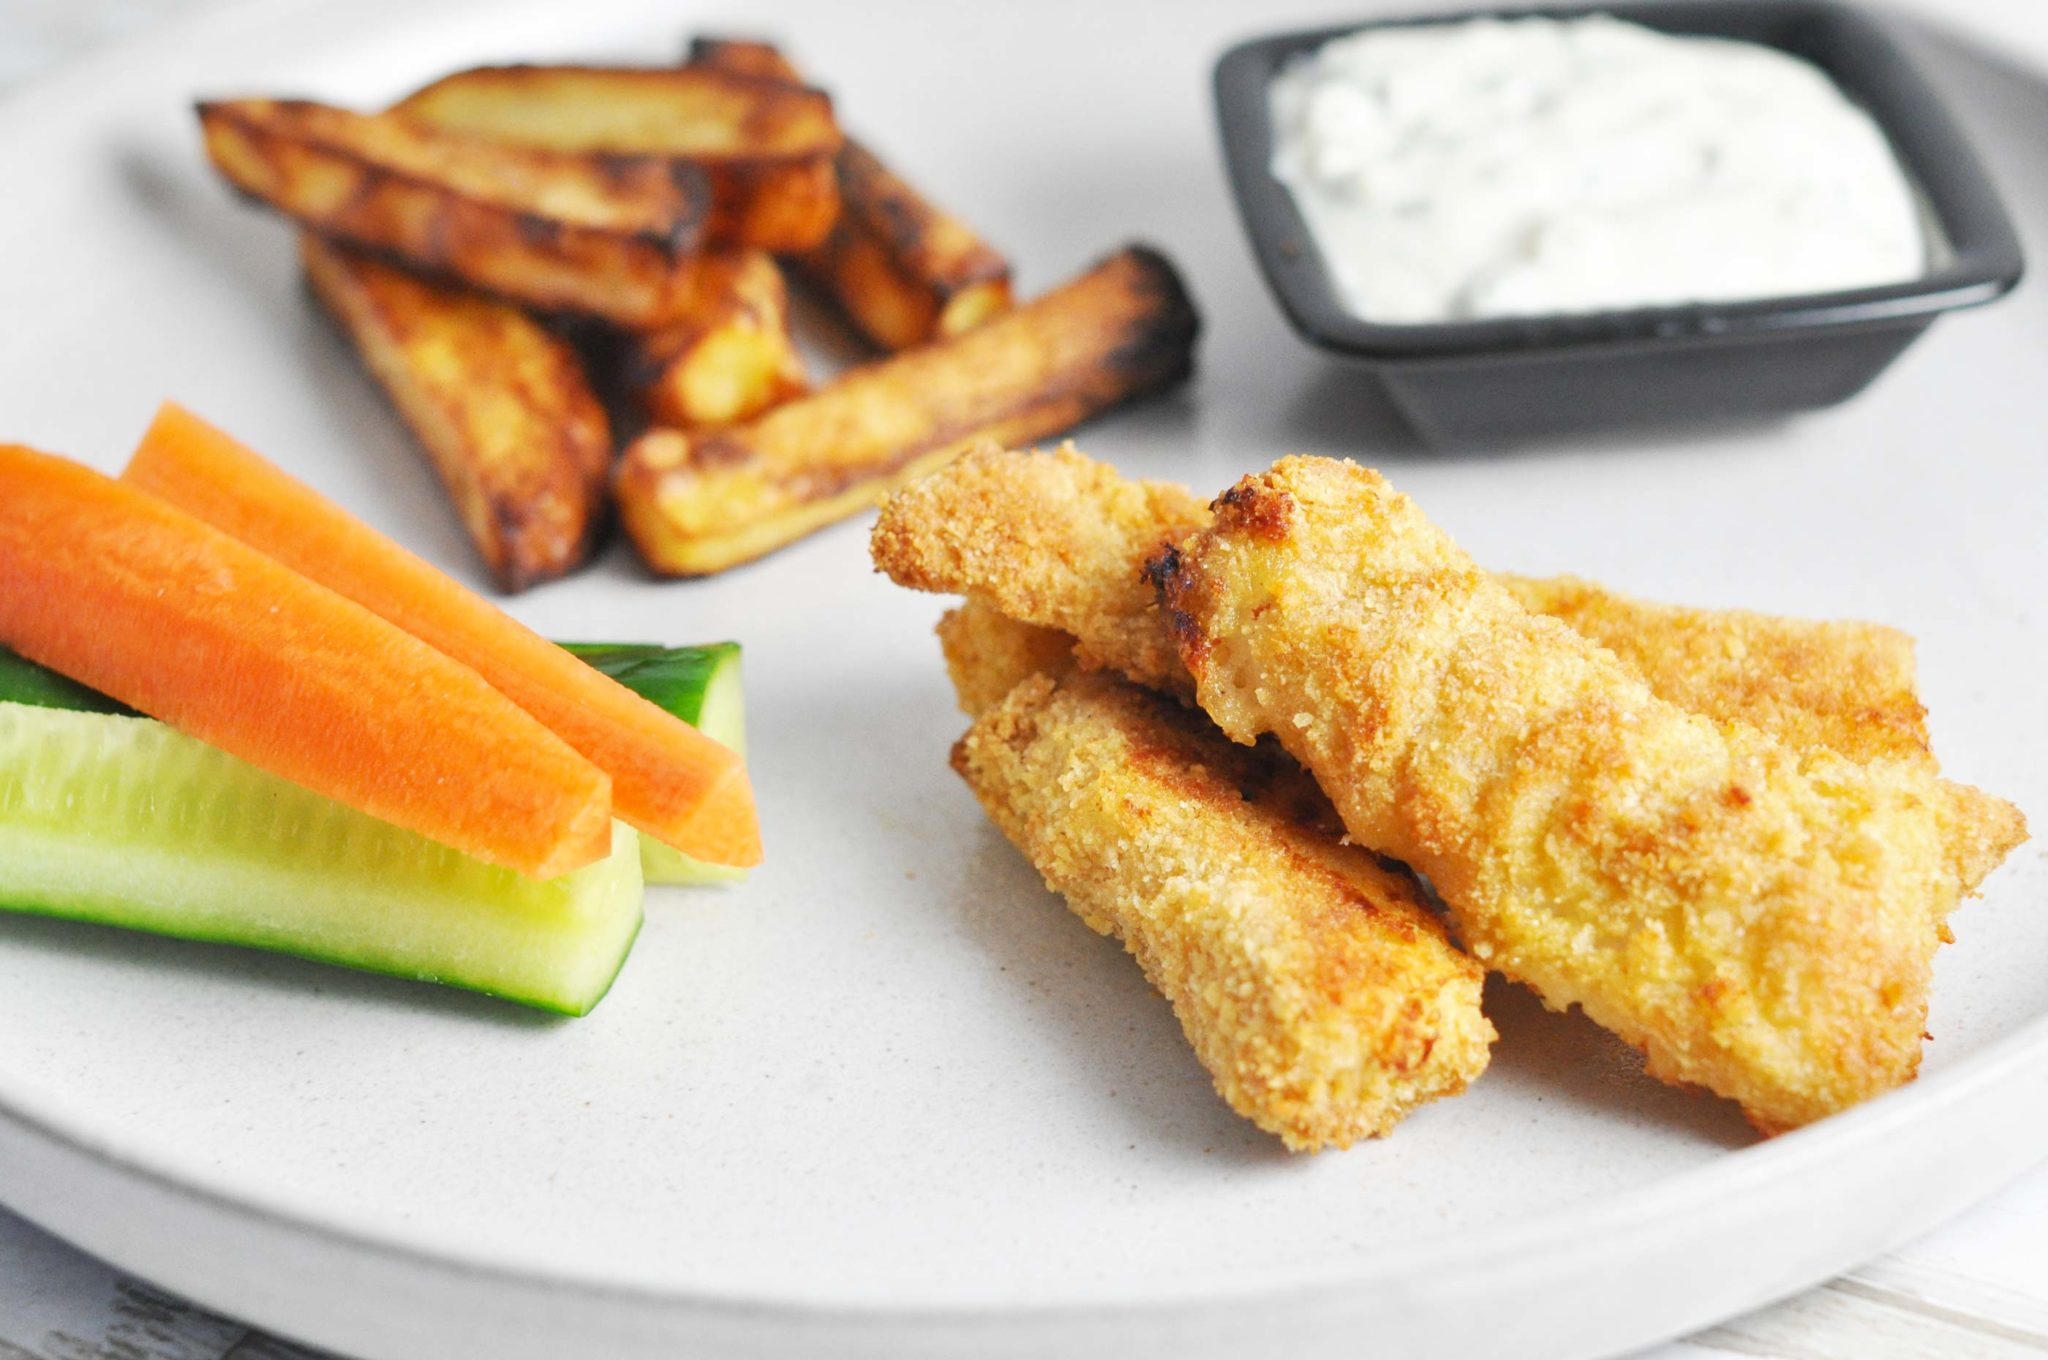 Skoleuddannelse harmonisk charme Hjemmelavet fish and chips i ovnen - sprødt og sundt